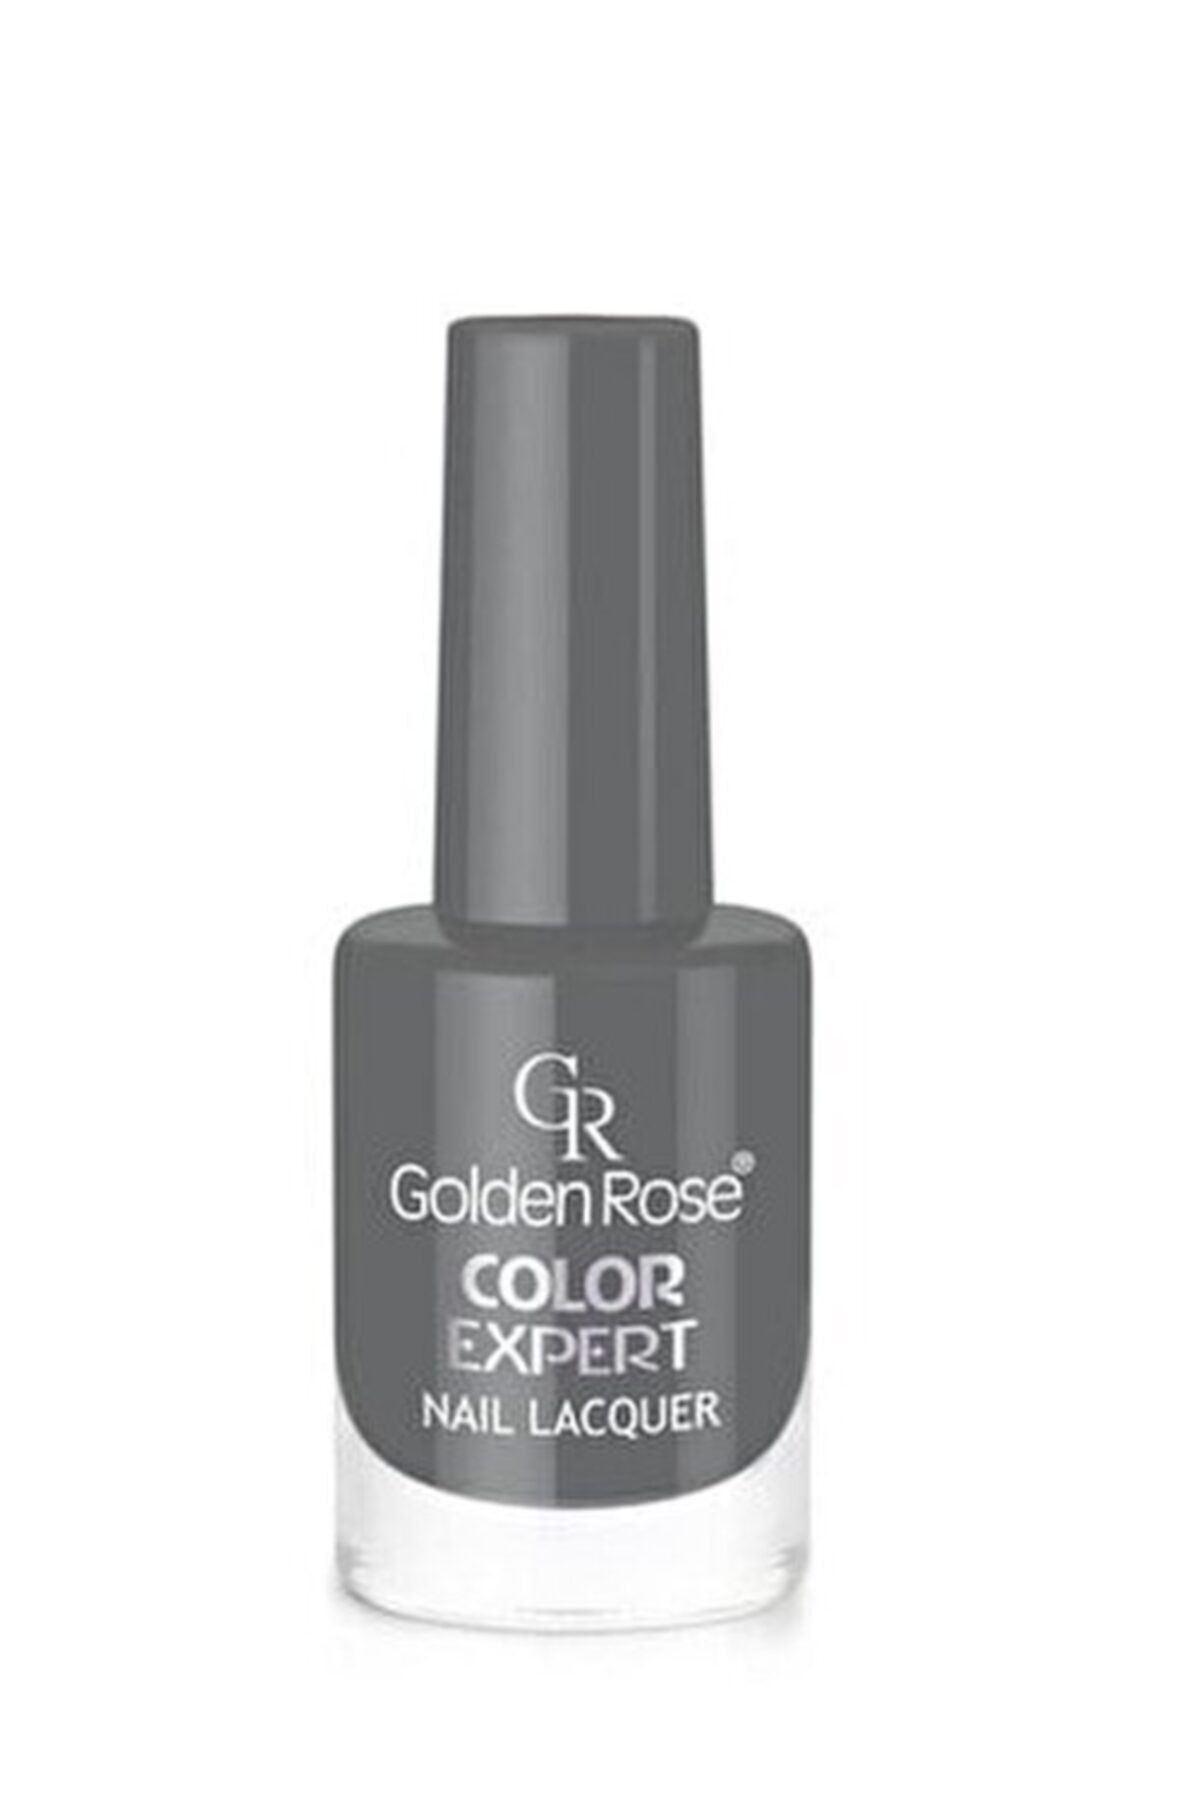 Golden Rose Gri Color Expert Nail Lacquer Oje No: 89 8691190703899 Ogcx